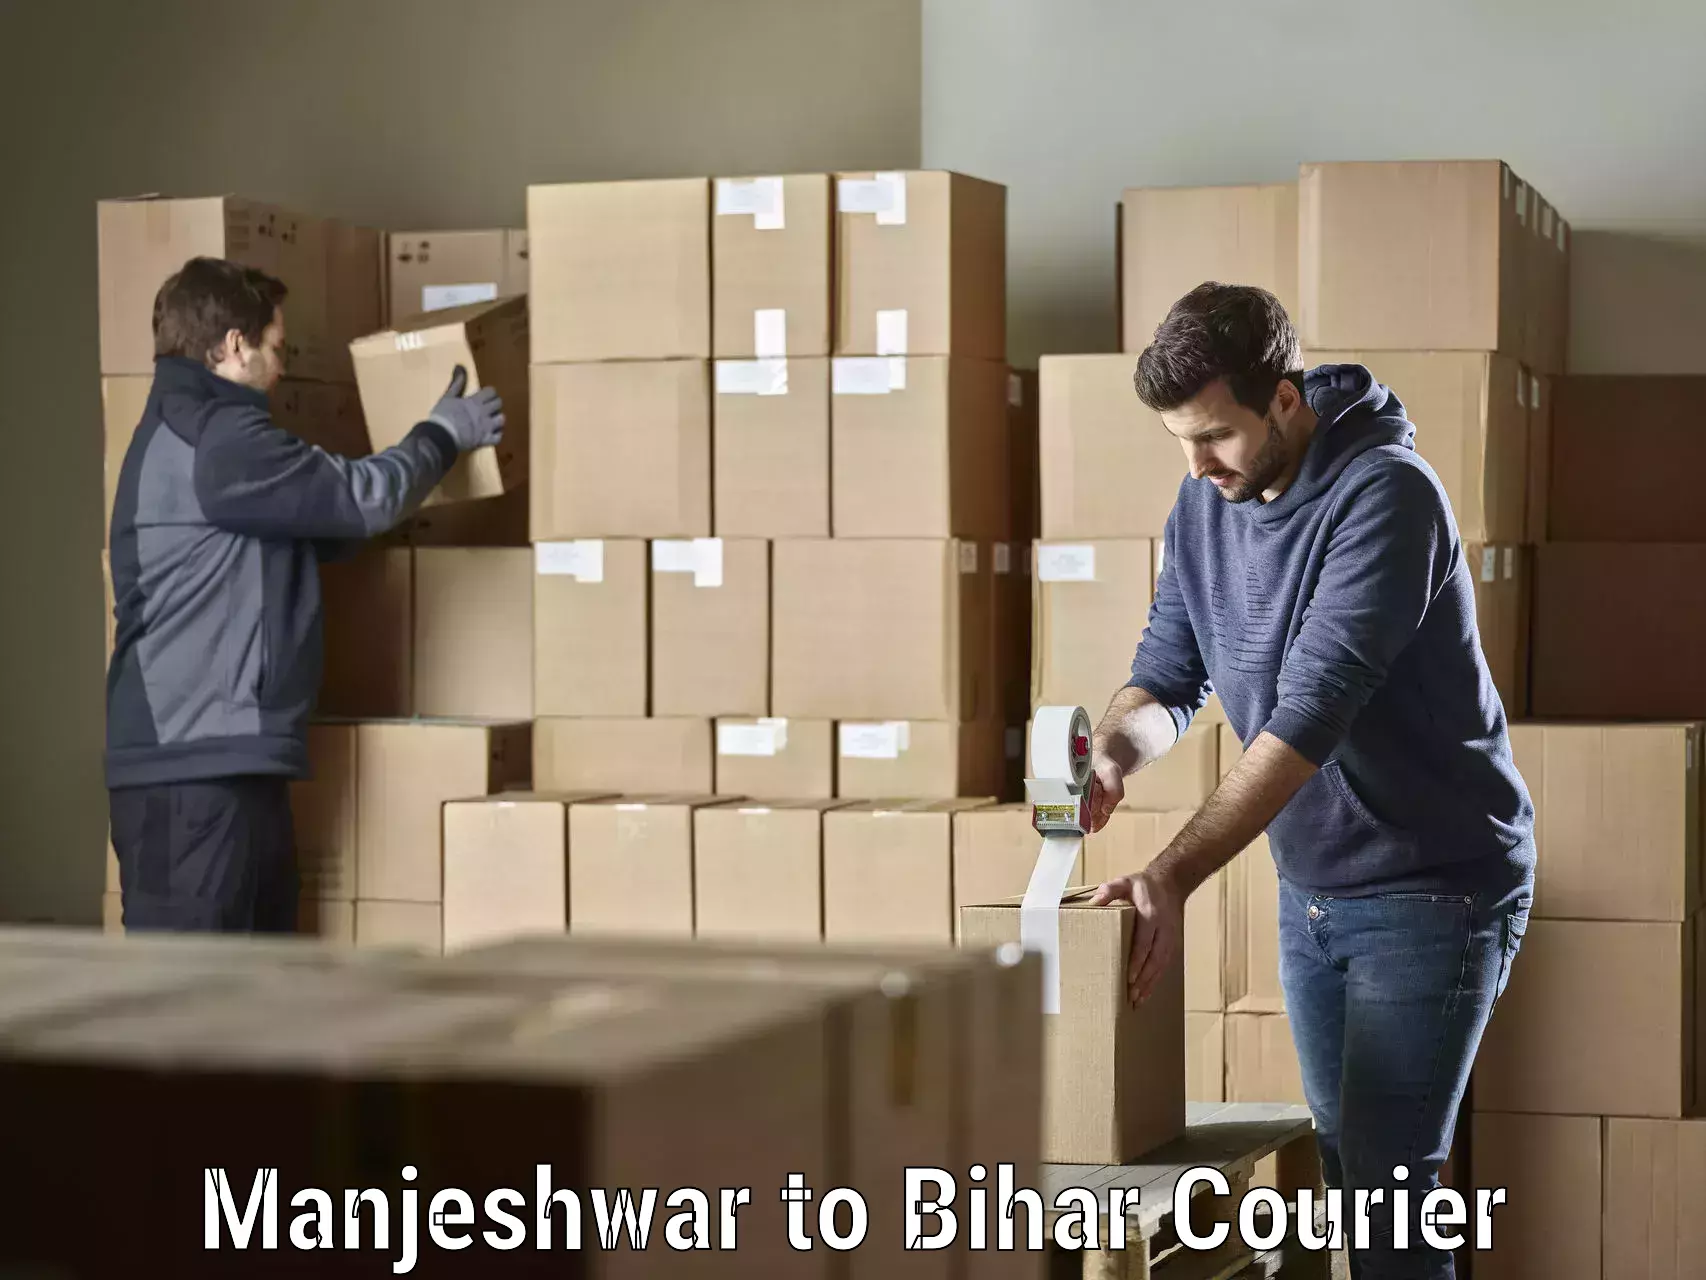 Courier service comparison Manjeshwar to Munger